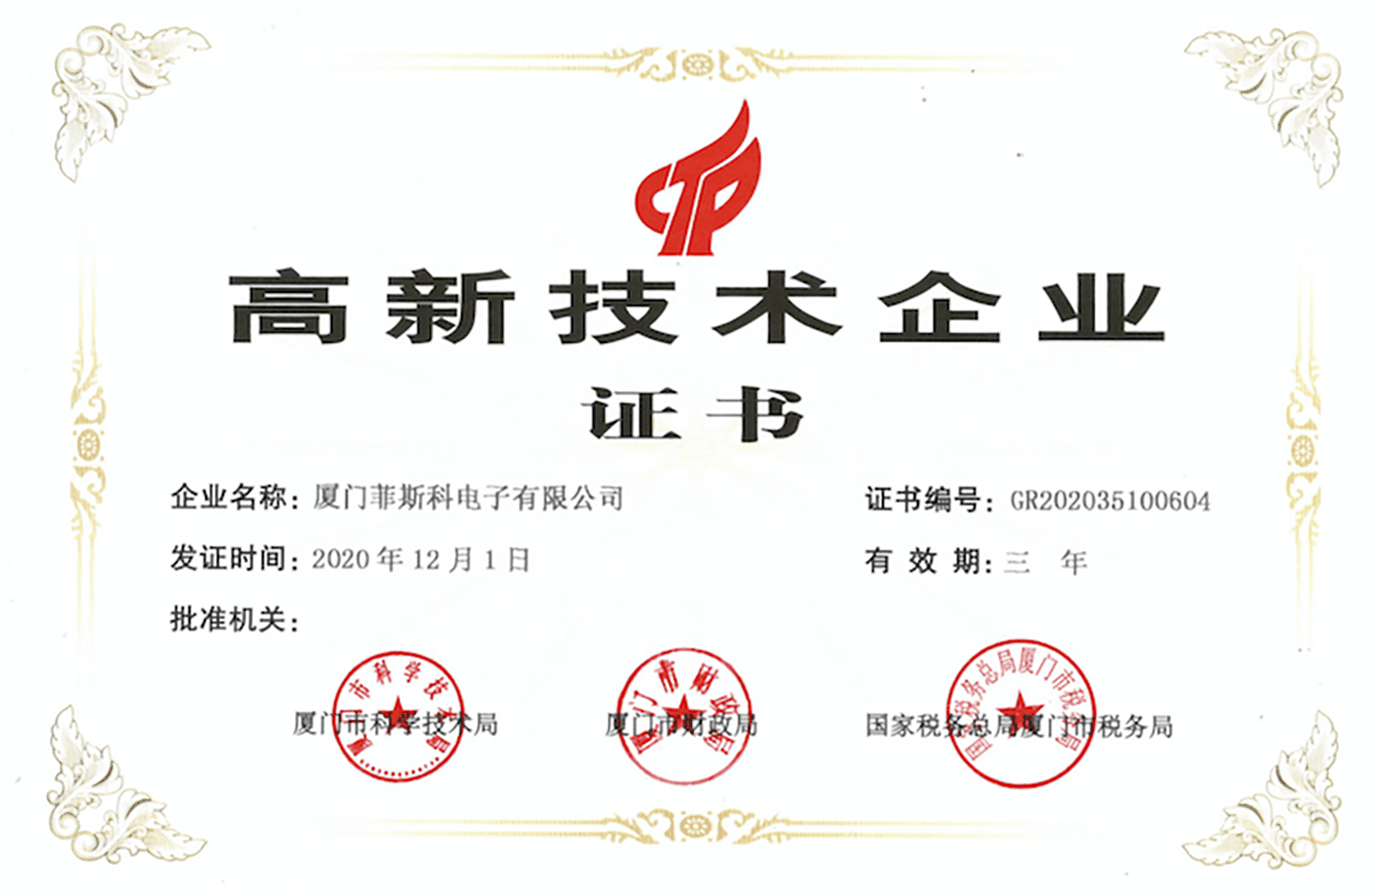 Certificate ng high-tech enterprise.png